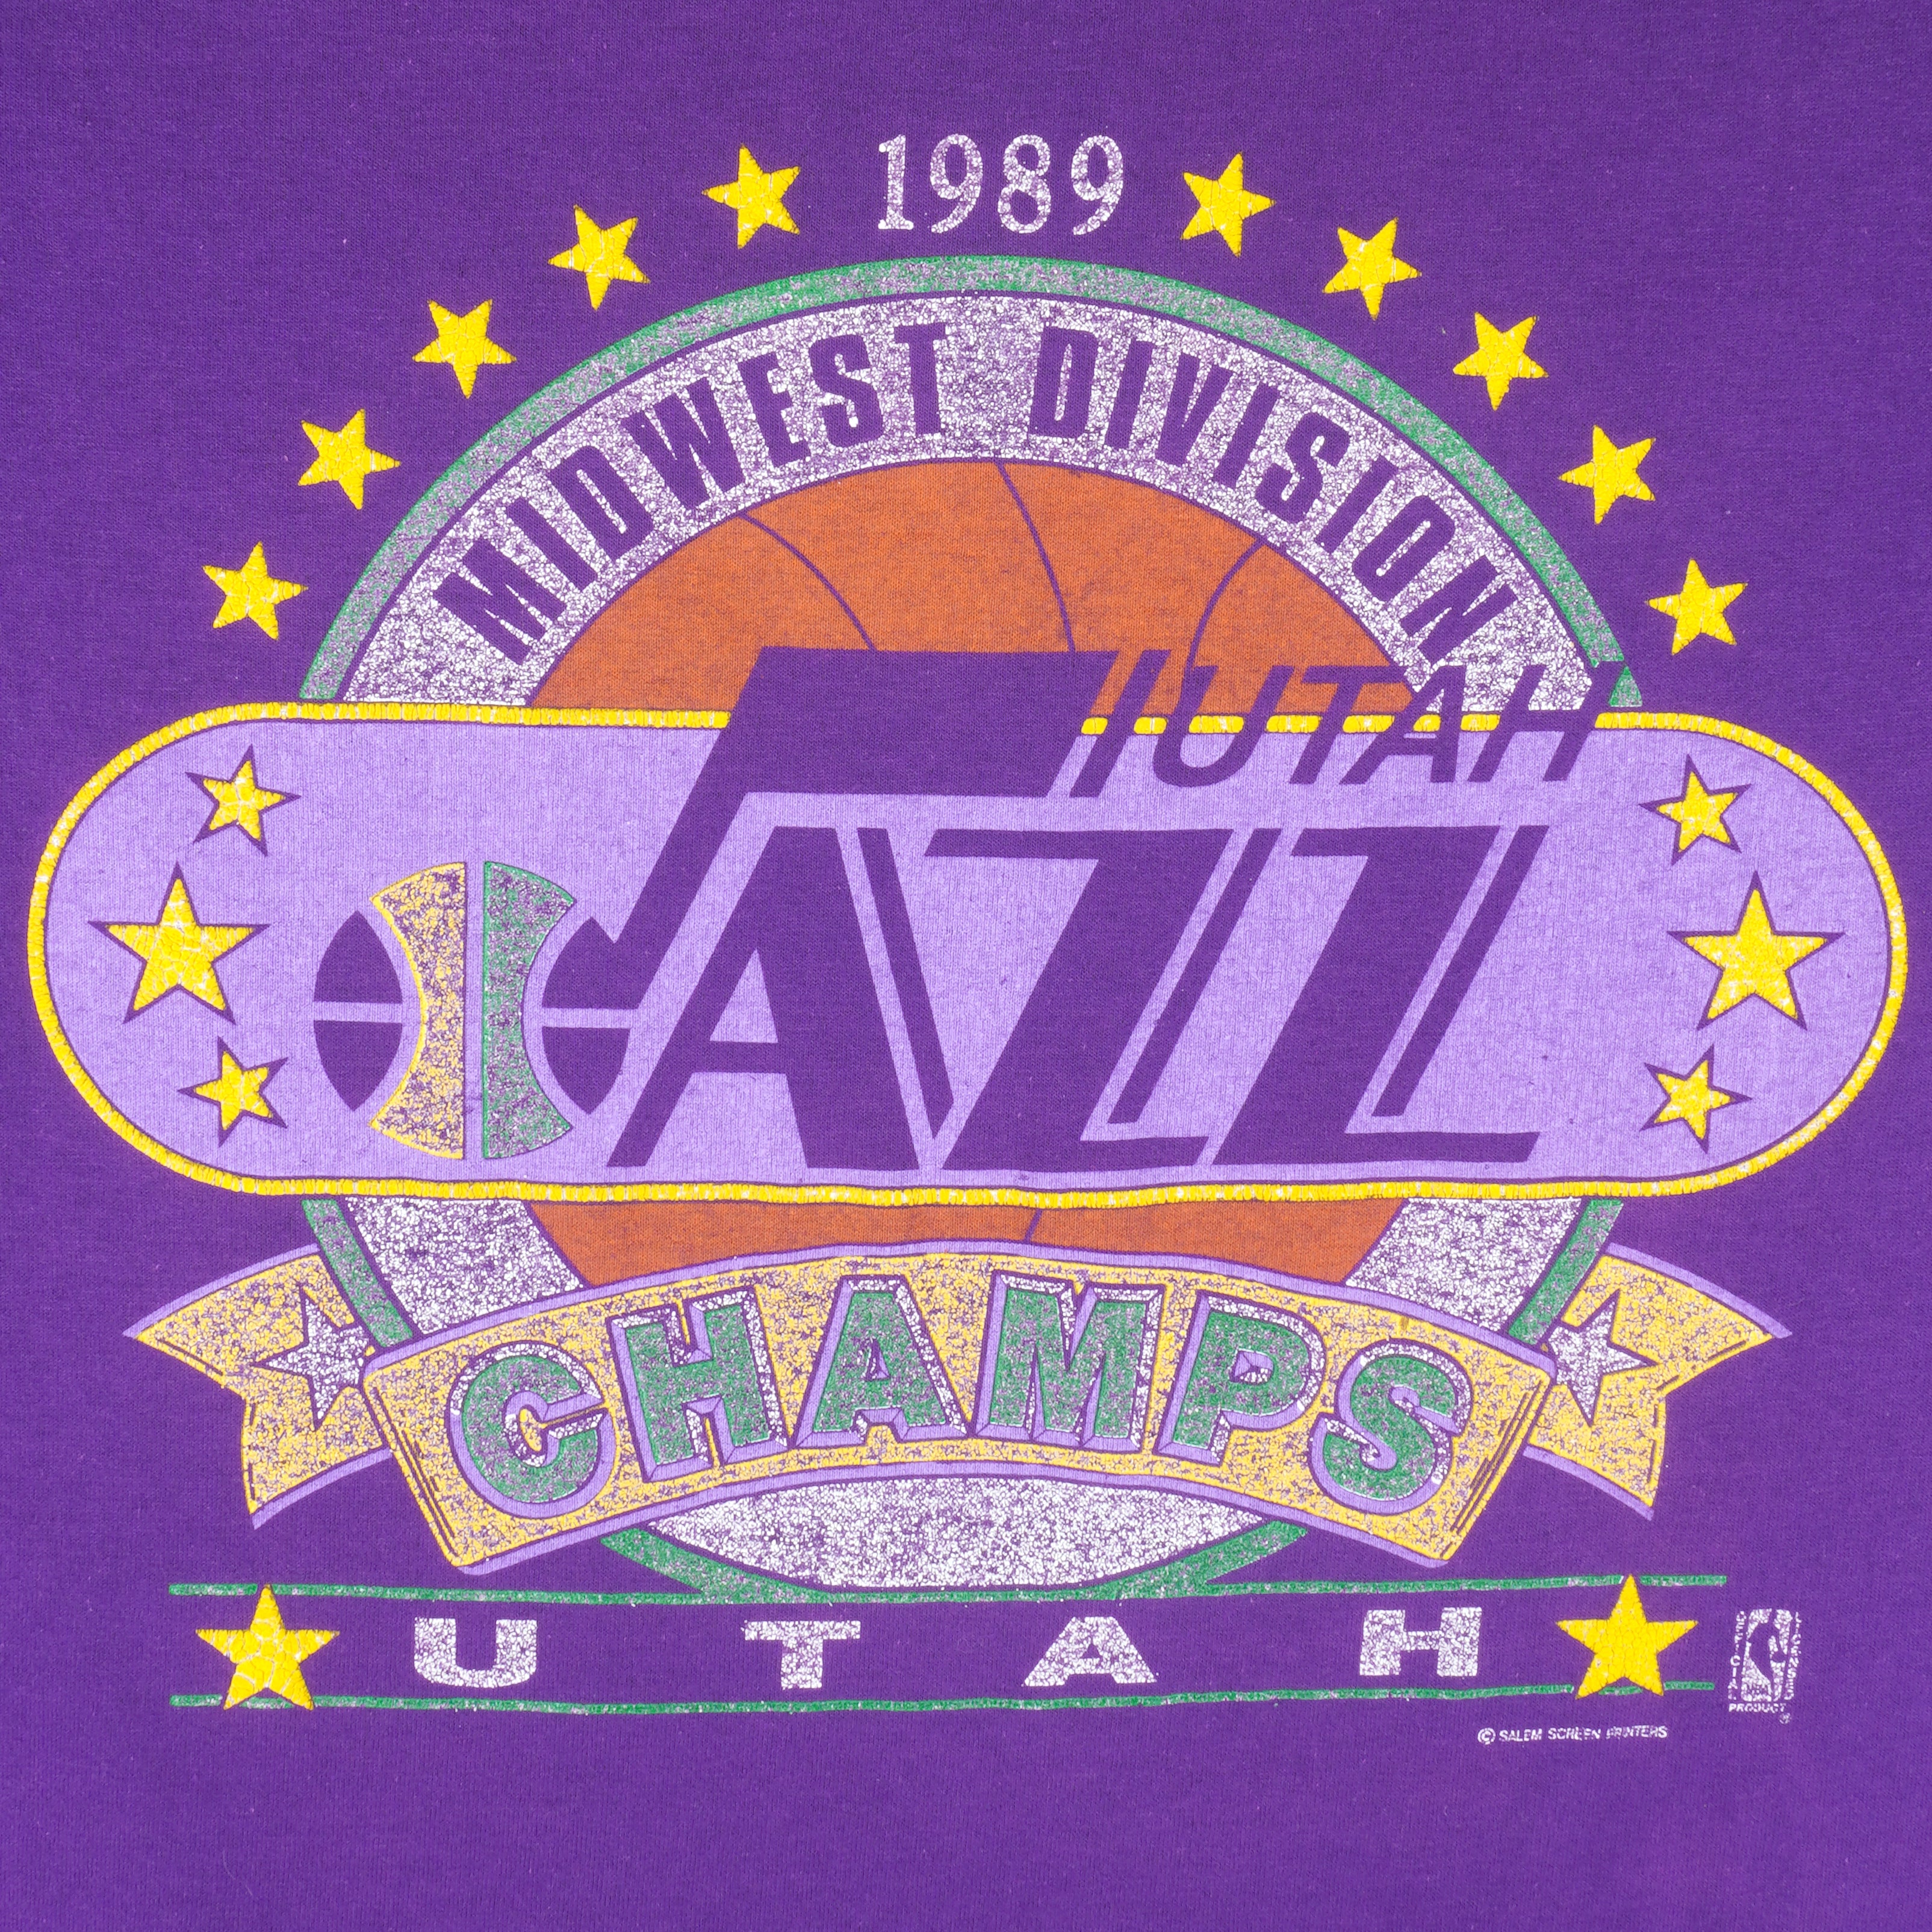 Vintage Utah Jazz Jersey Adult Size Extra Large Purple Logo 7 NBA